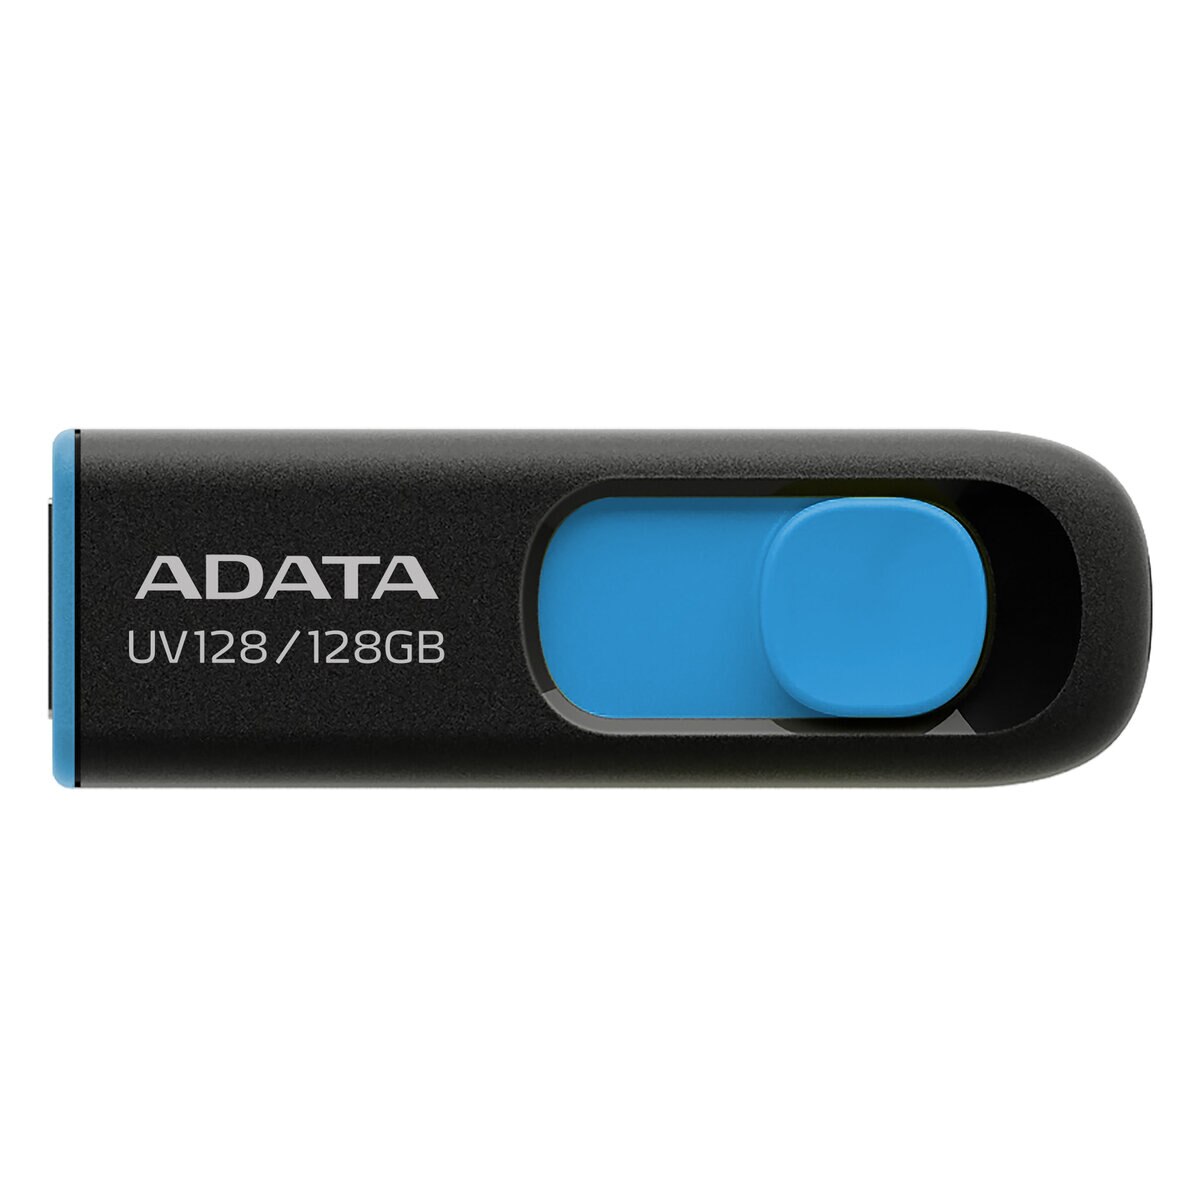 ADATA USBメモリー 128GB USB3.0 10本セット AUV128-128G-RBE/10SET